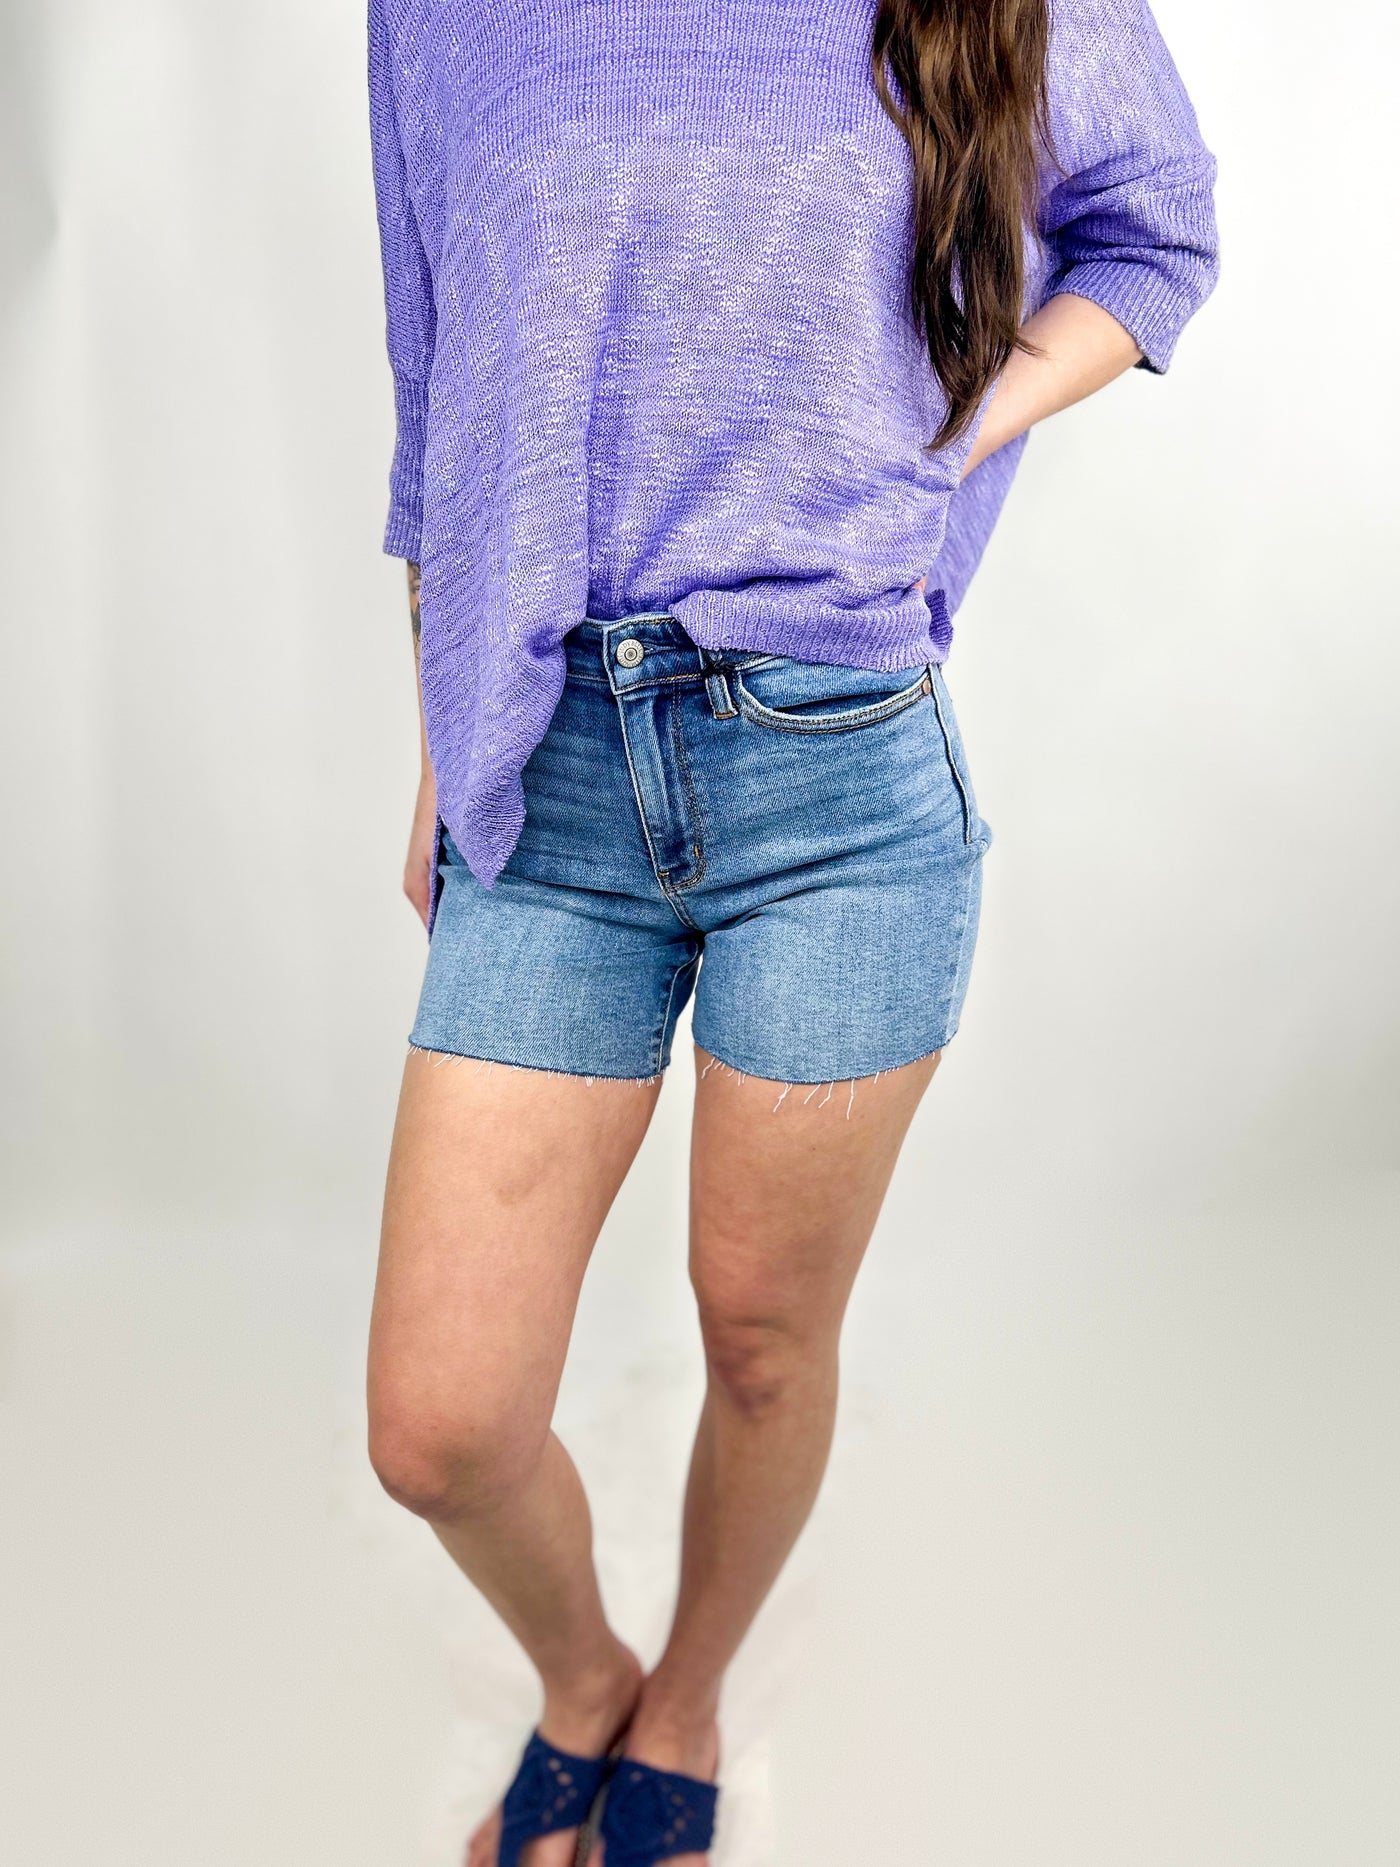 Model Status Shorts by Judy Blue